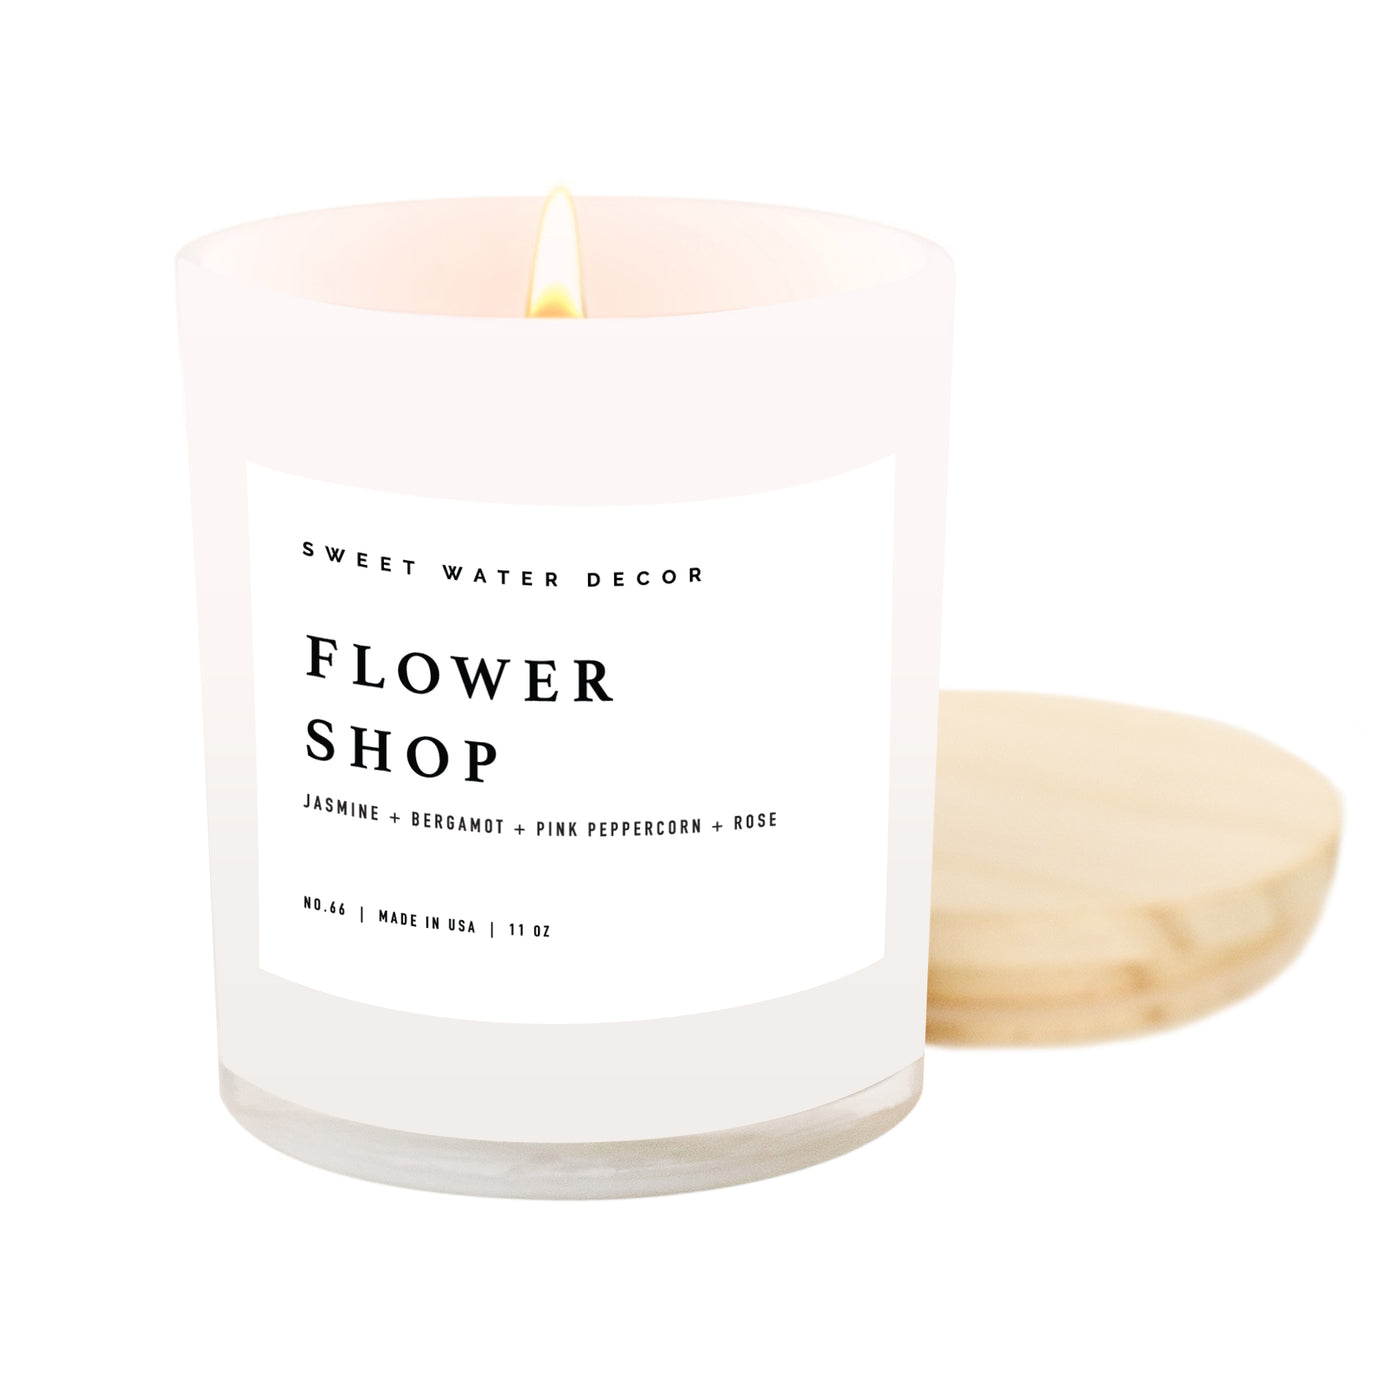 Flower Shop Soy Candle - White Jar - 11 oz